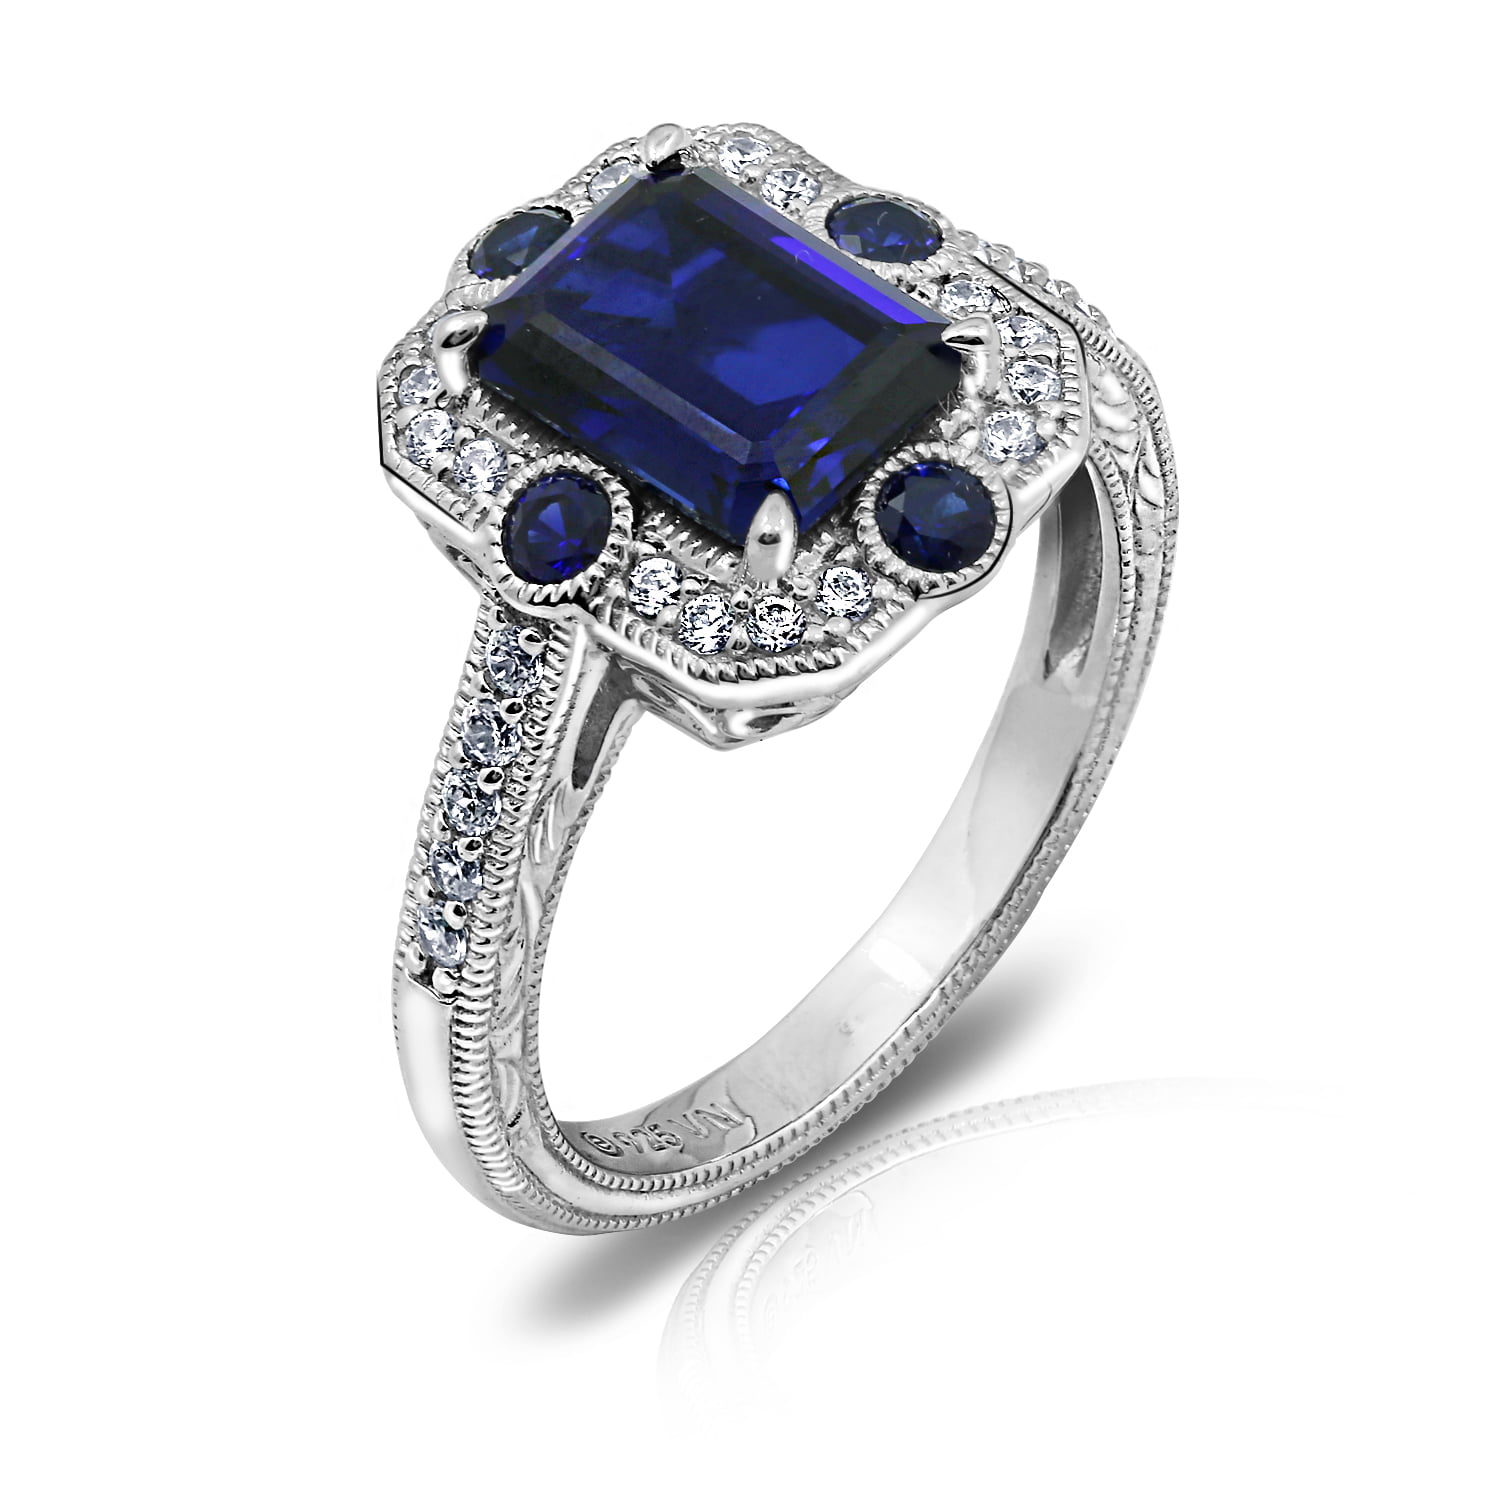 Details about  / Oval Cut Blue Cubic Zirconia Gemstone 925 Sterling Silver Split Shank Ring